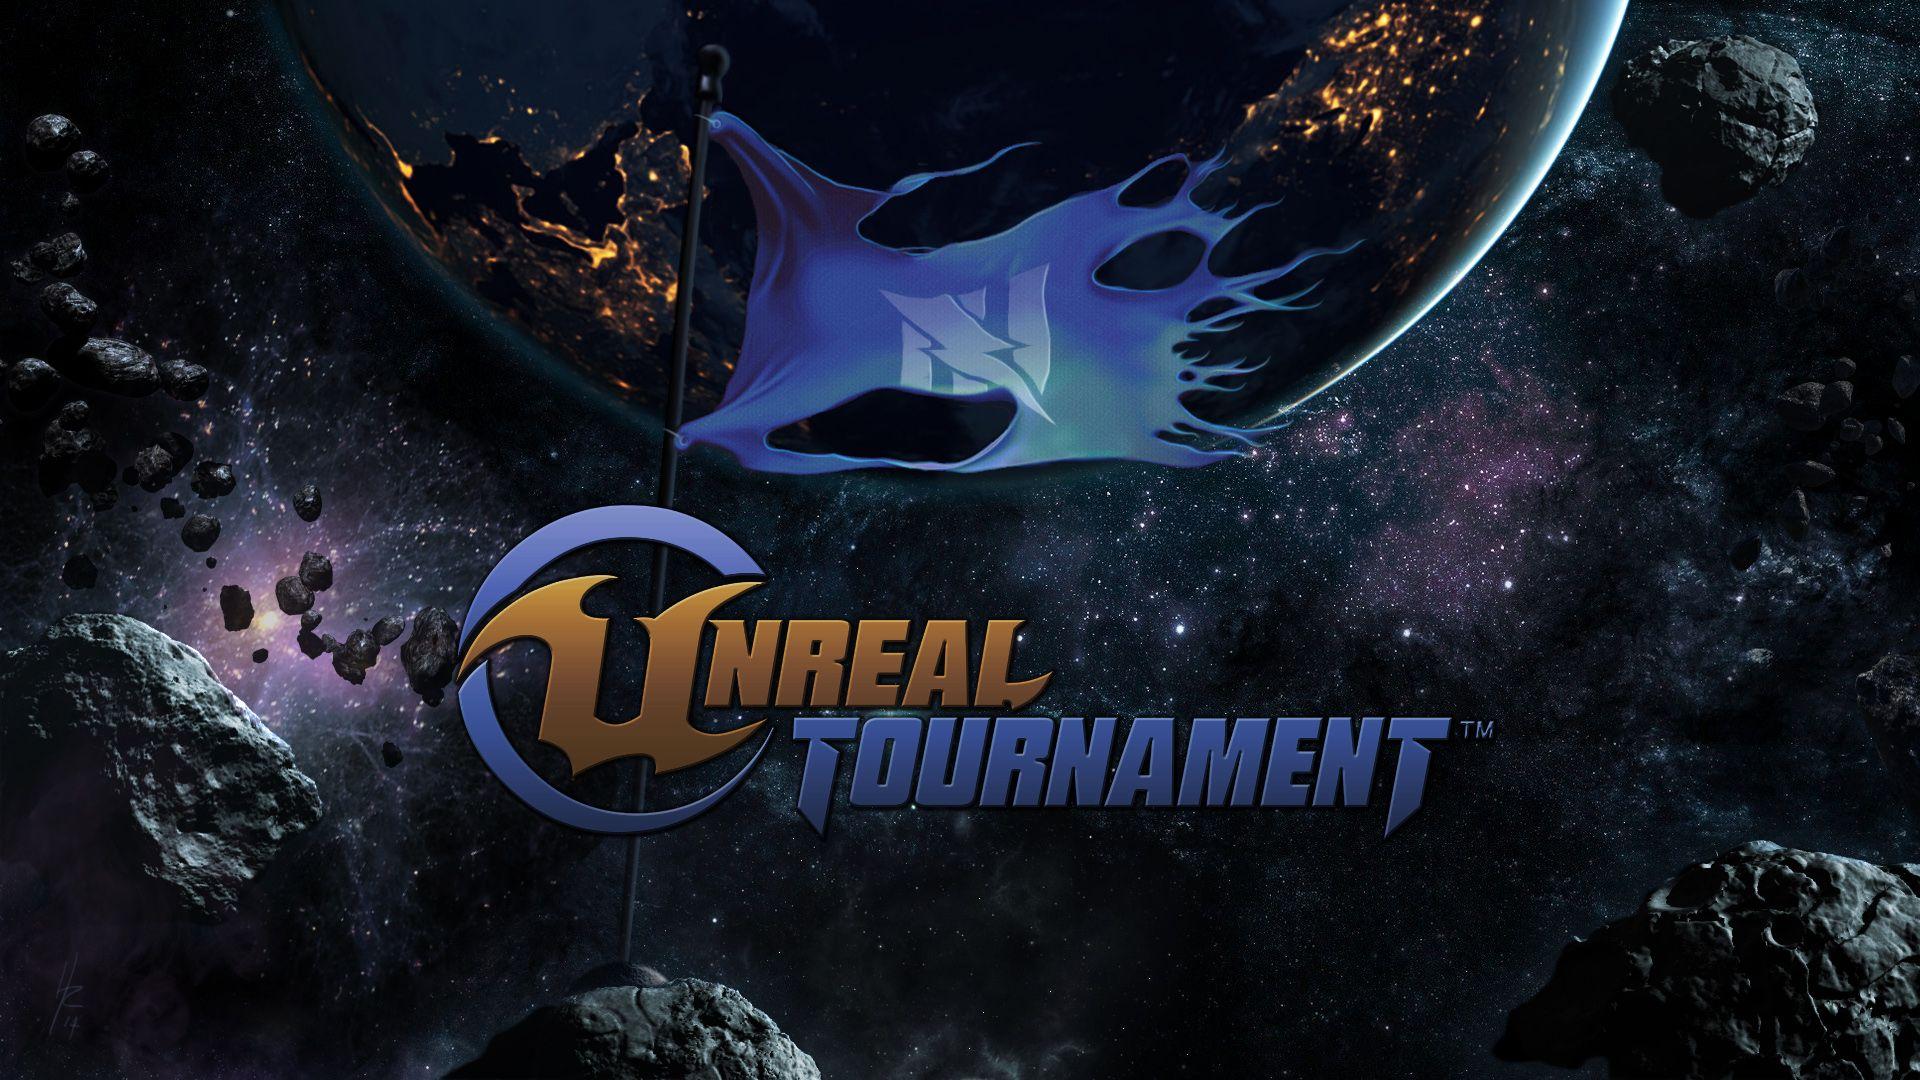 New official logo download & wallpaper Tournament